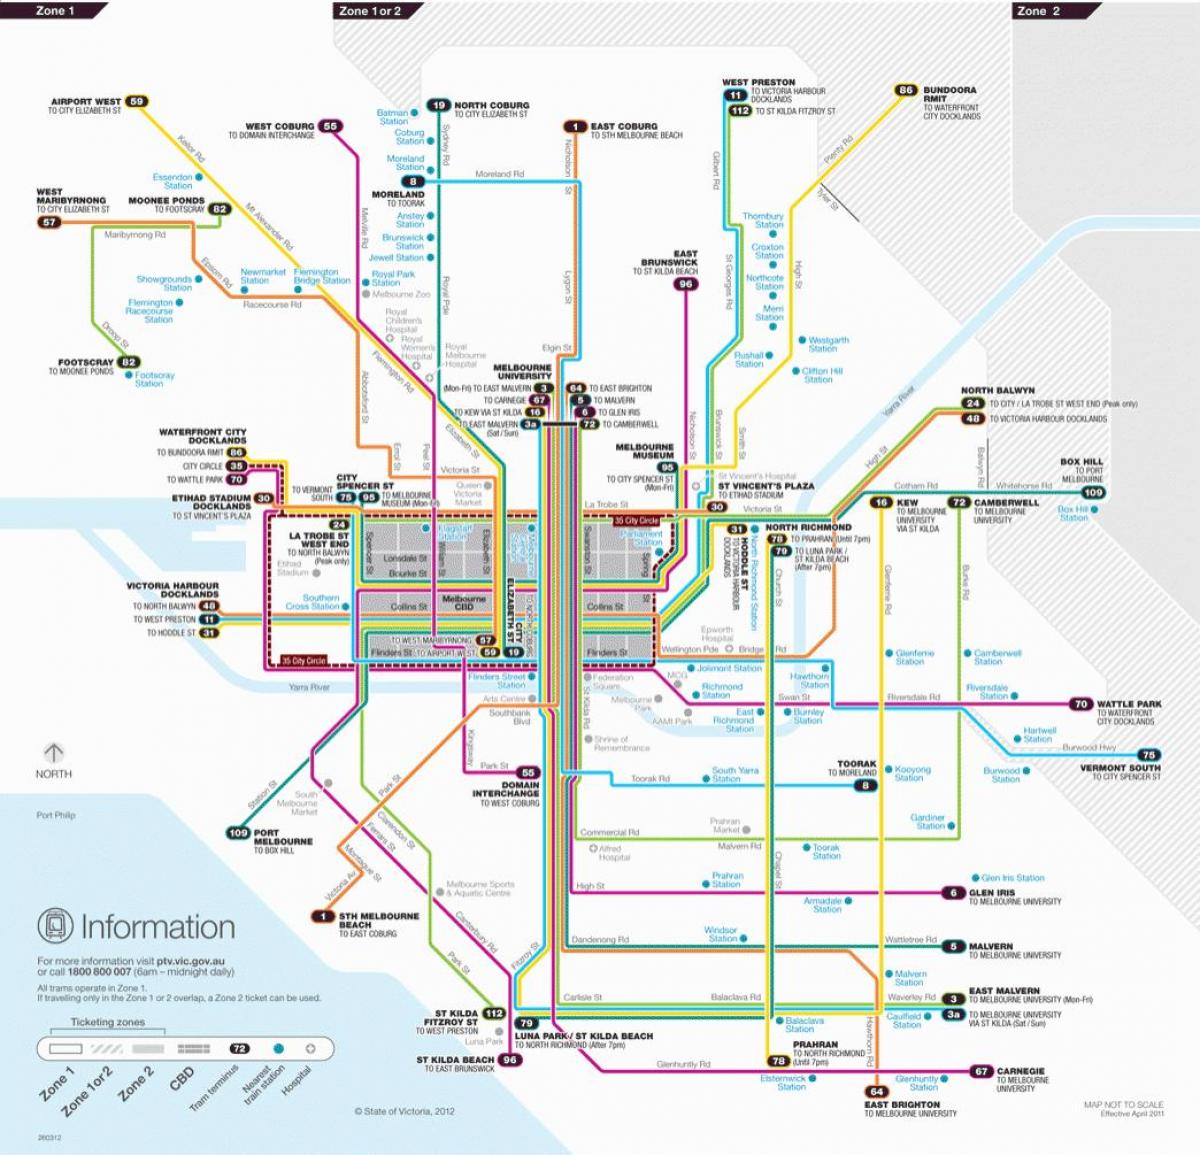 Melbourne trammi-võrgu kaart